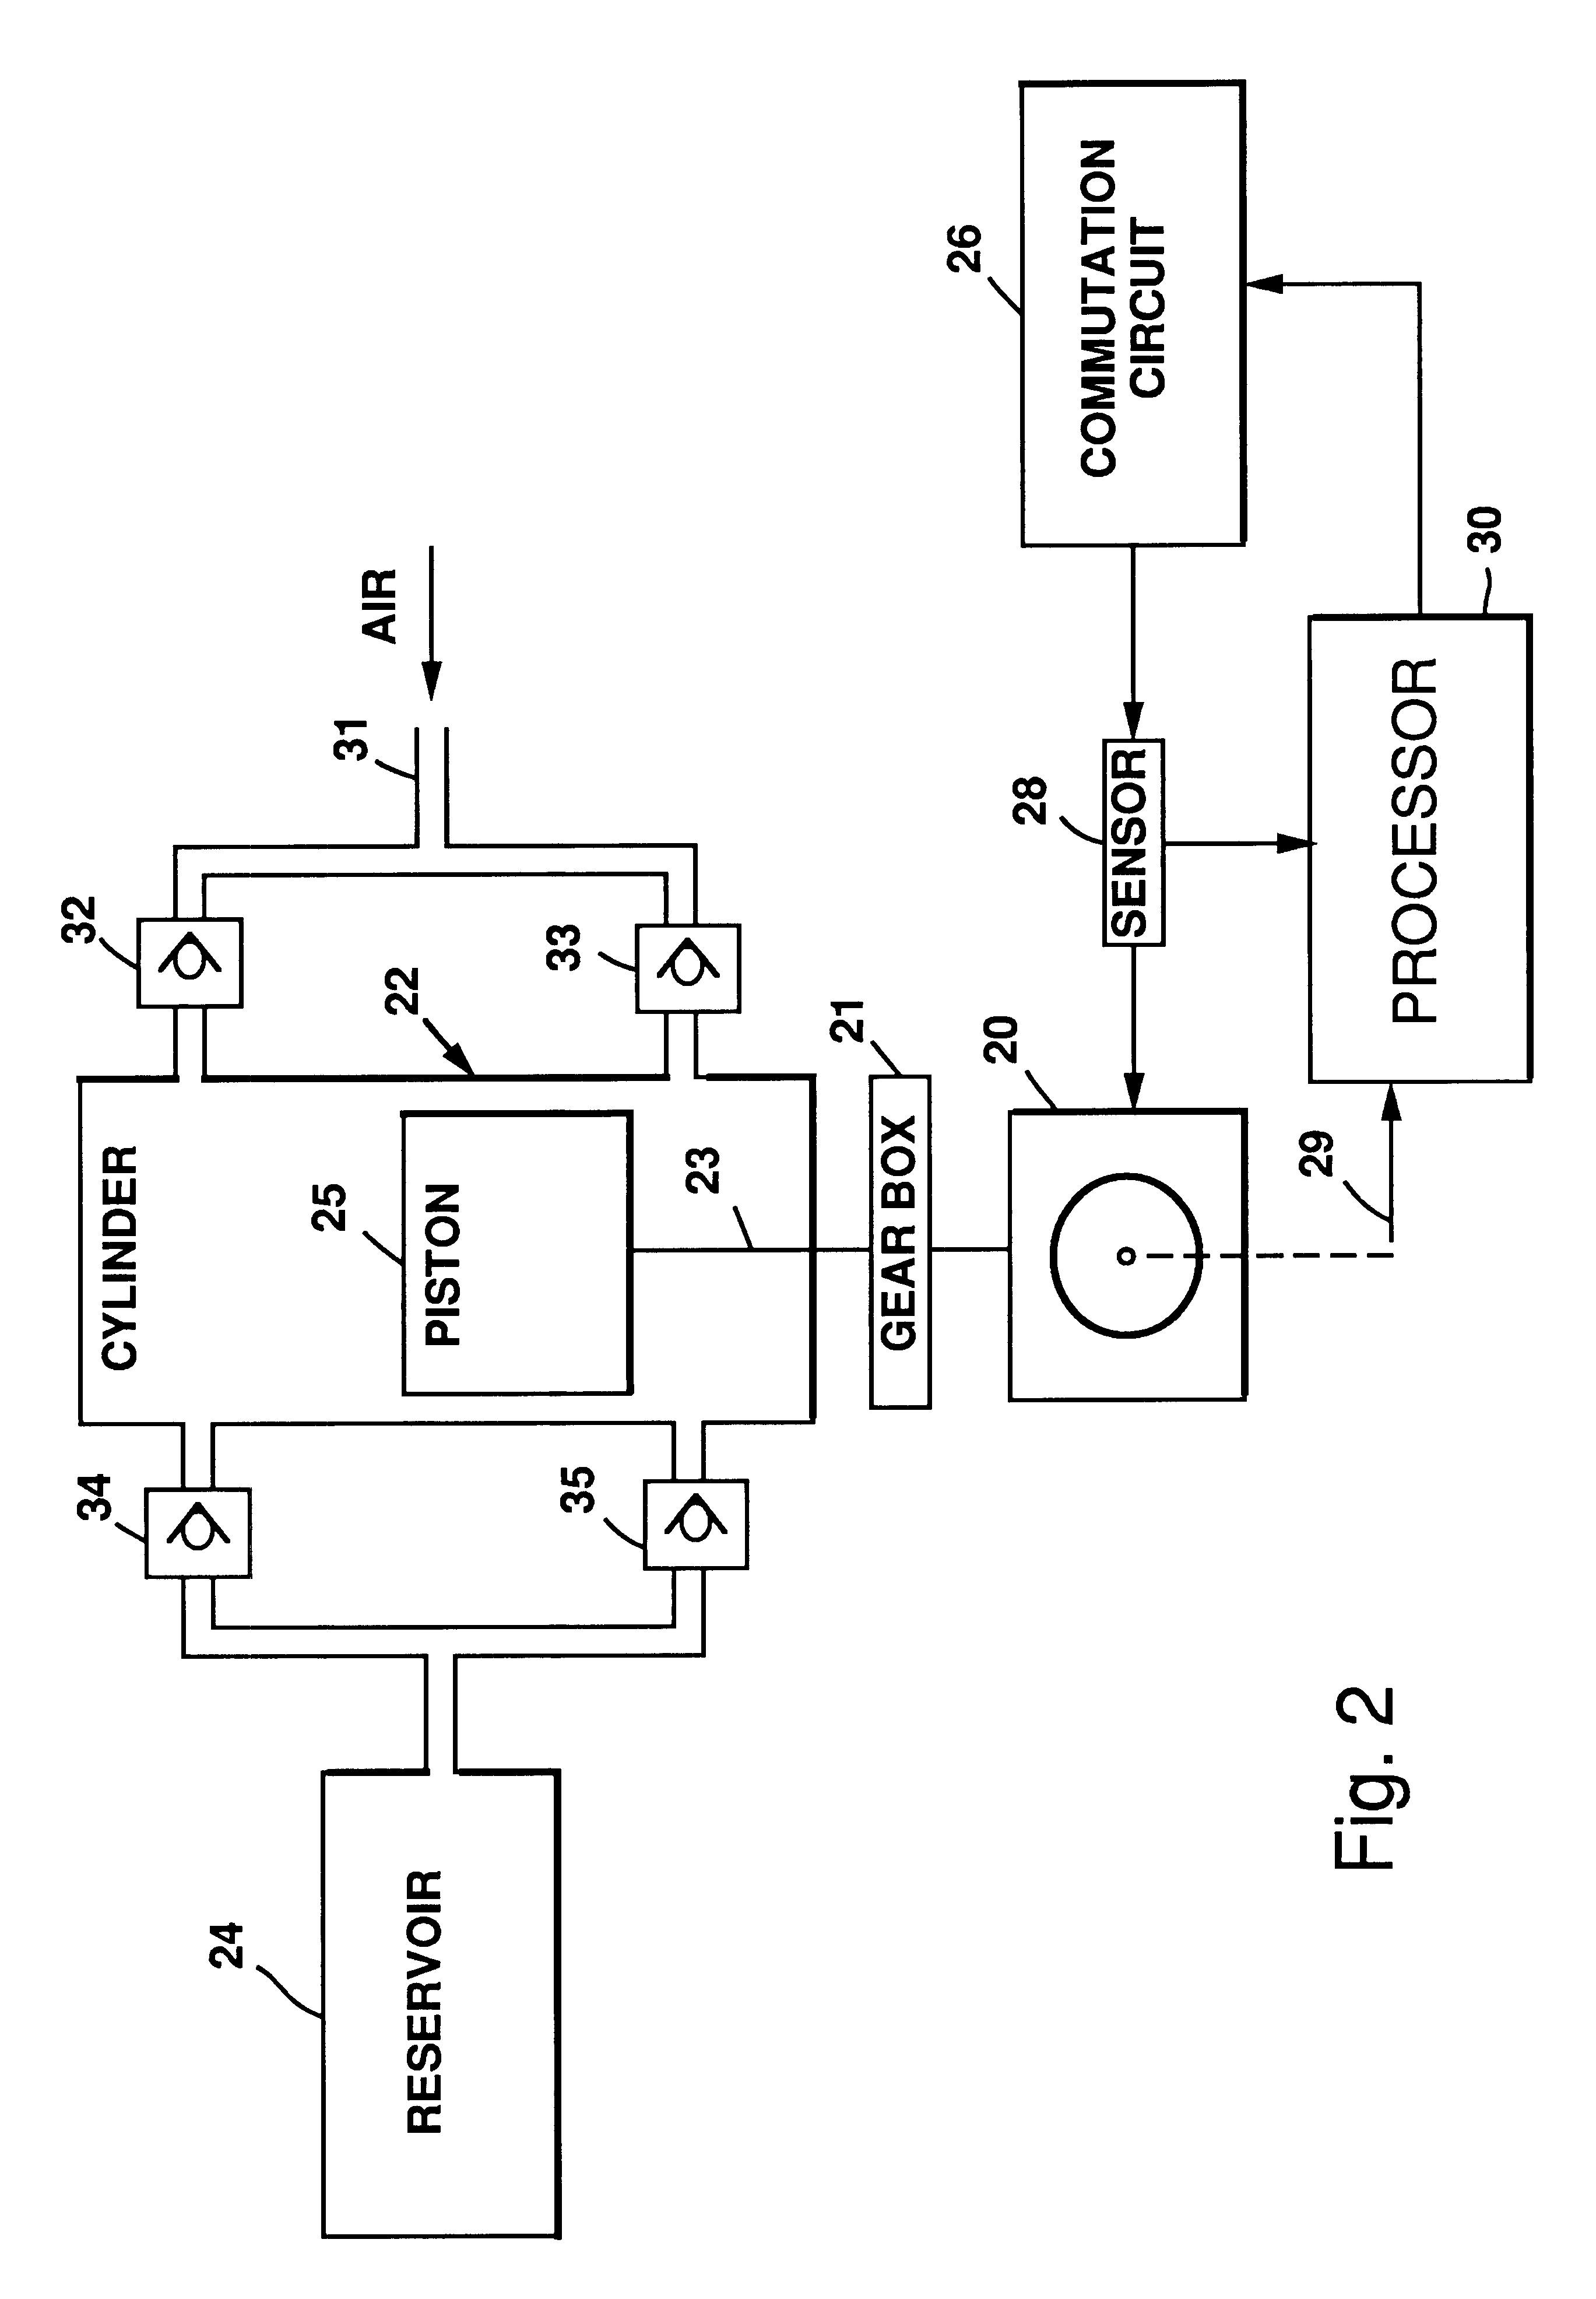 Pressure control system using input current sensing